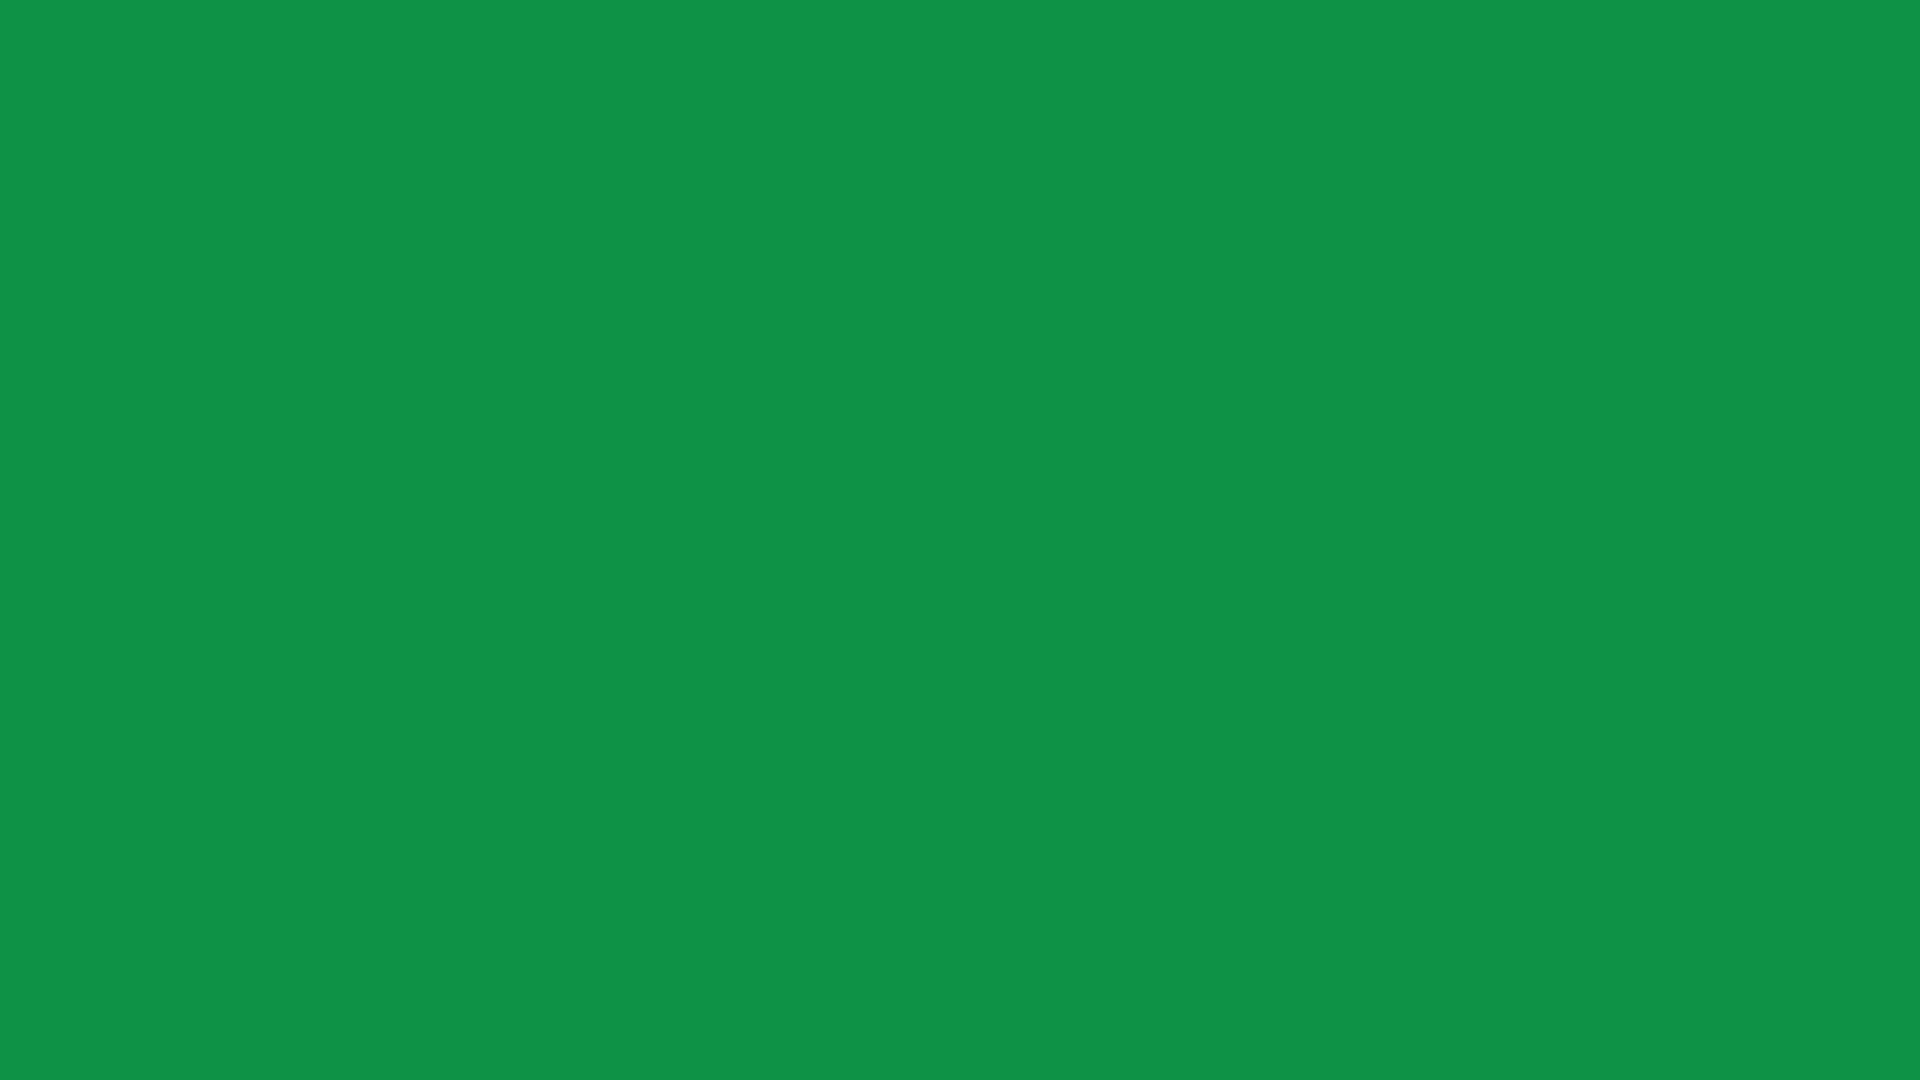 Spring green Wallpaper Free Download Vector, PNG